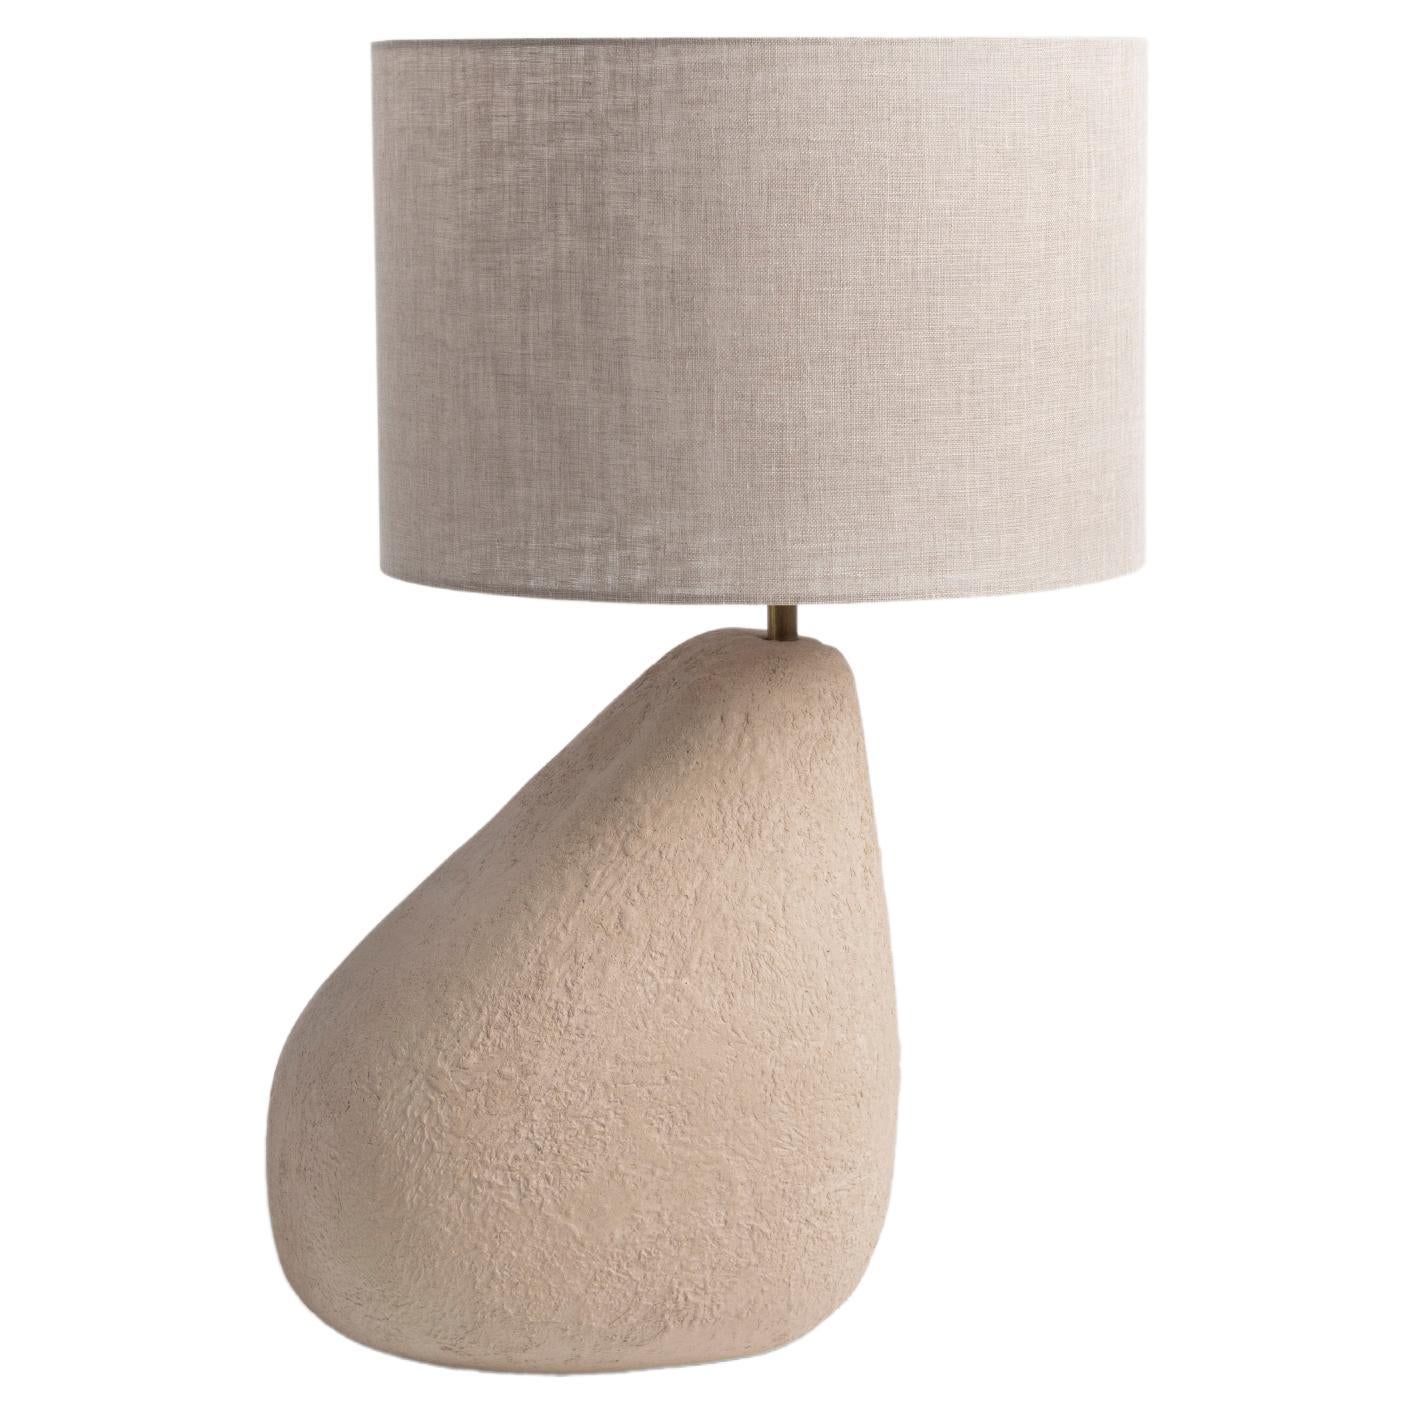 Sinatra Handmade Ceramic Table Lamp For Sale